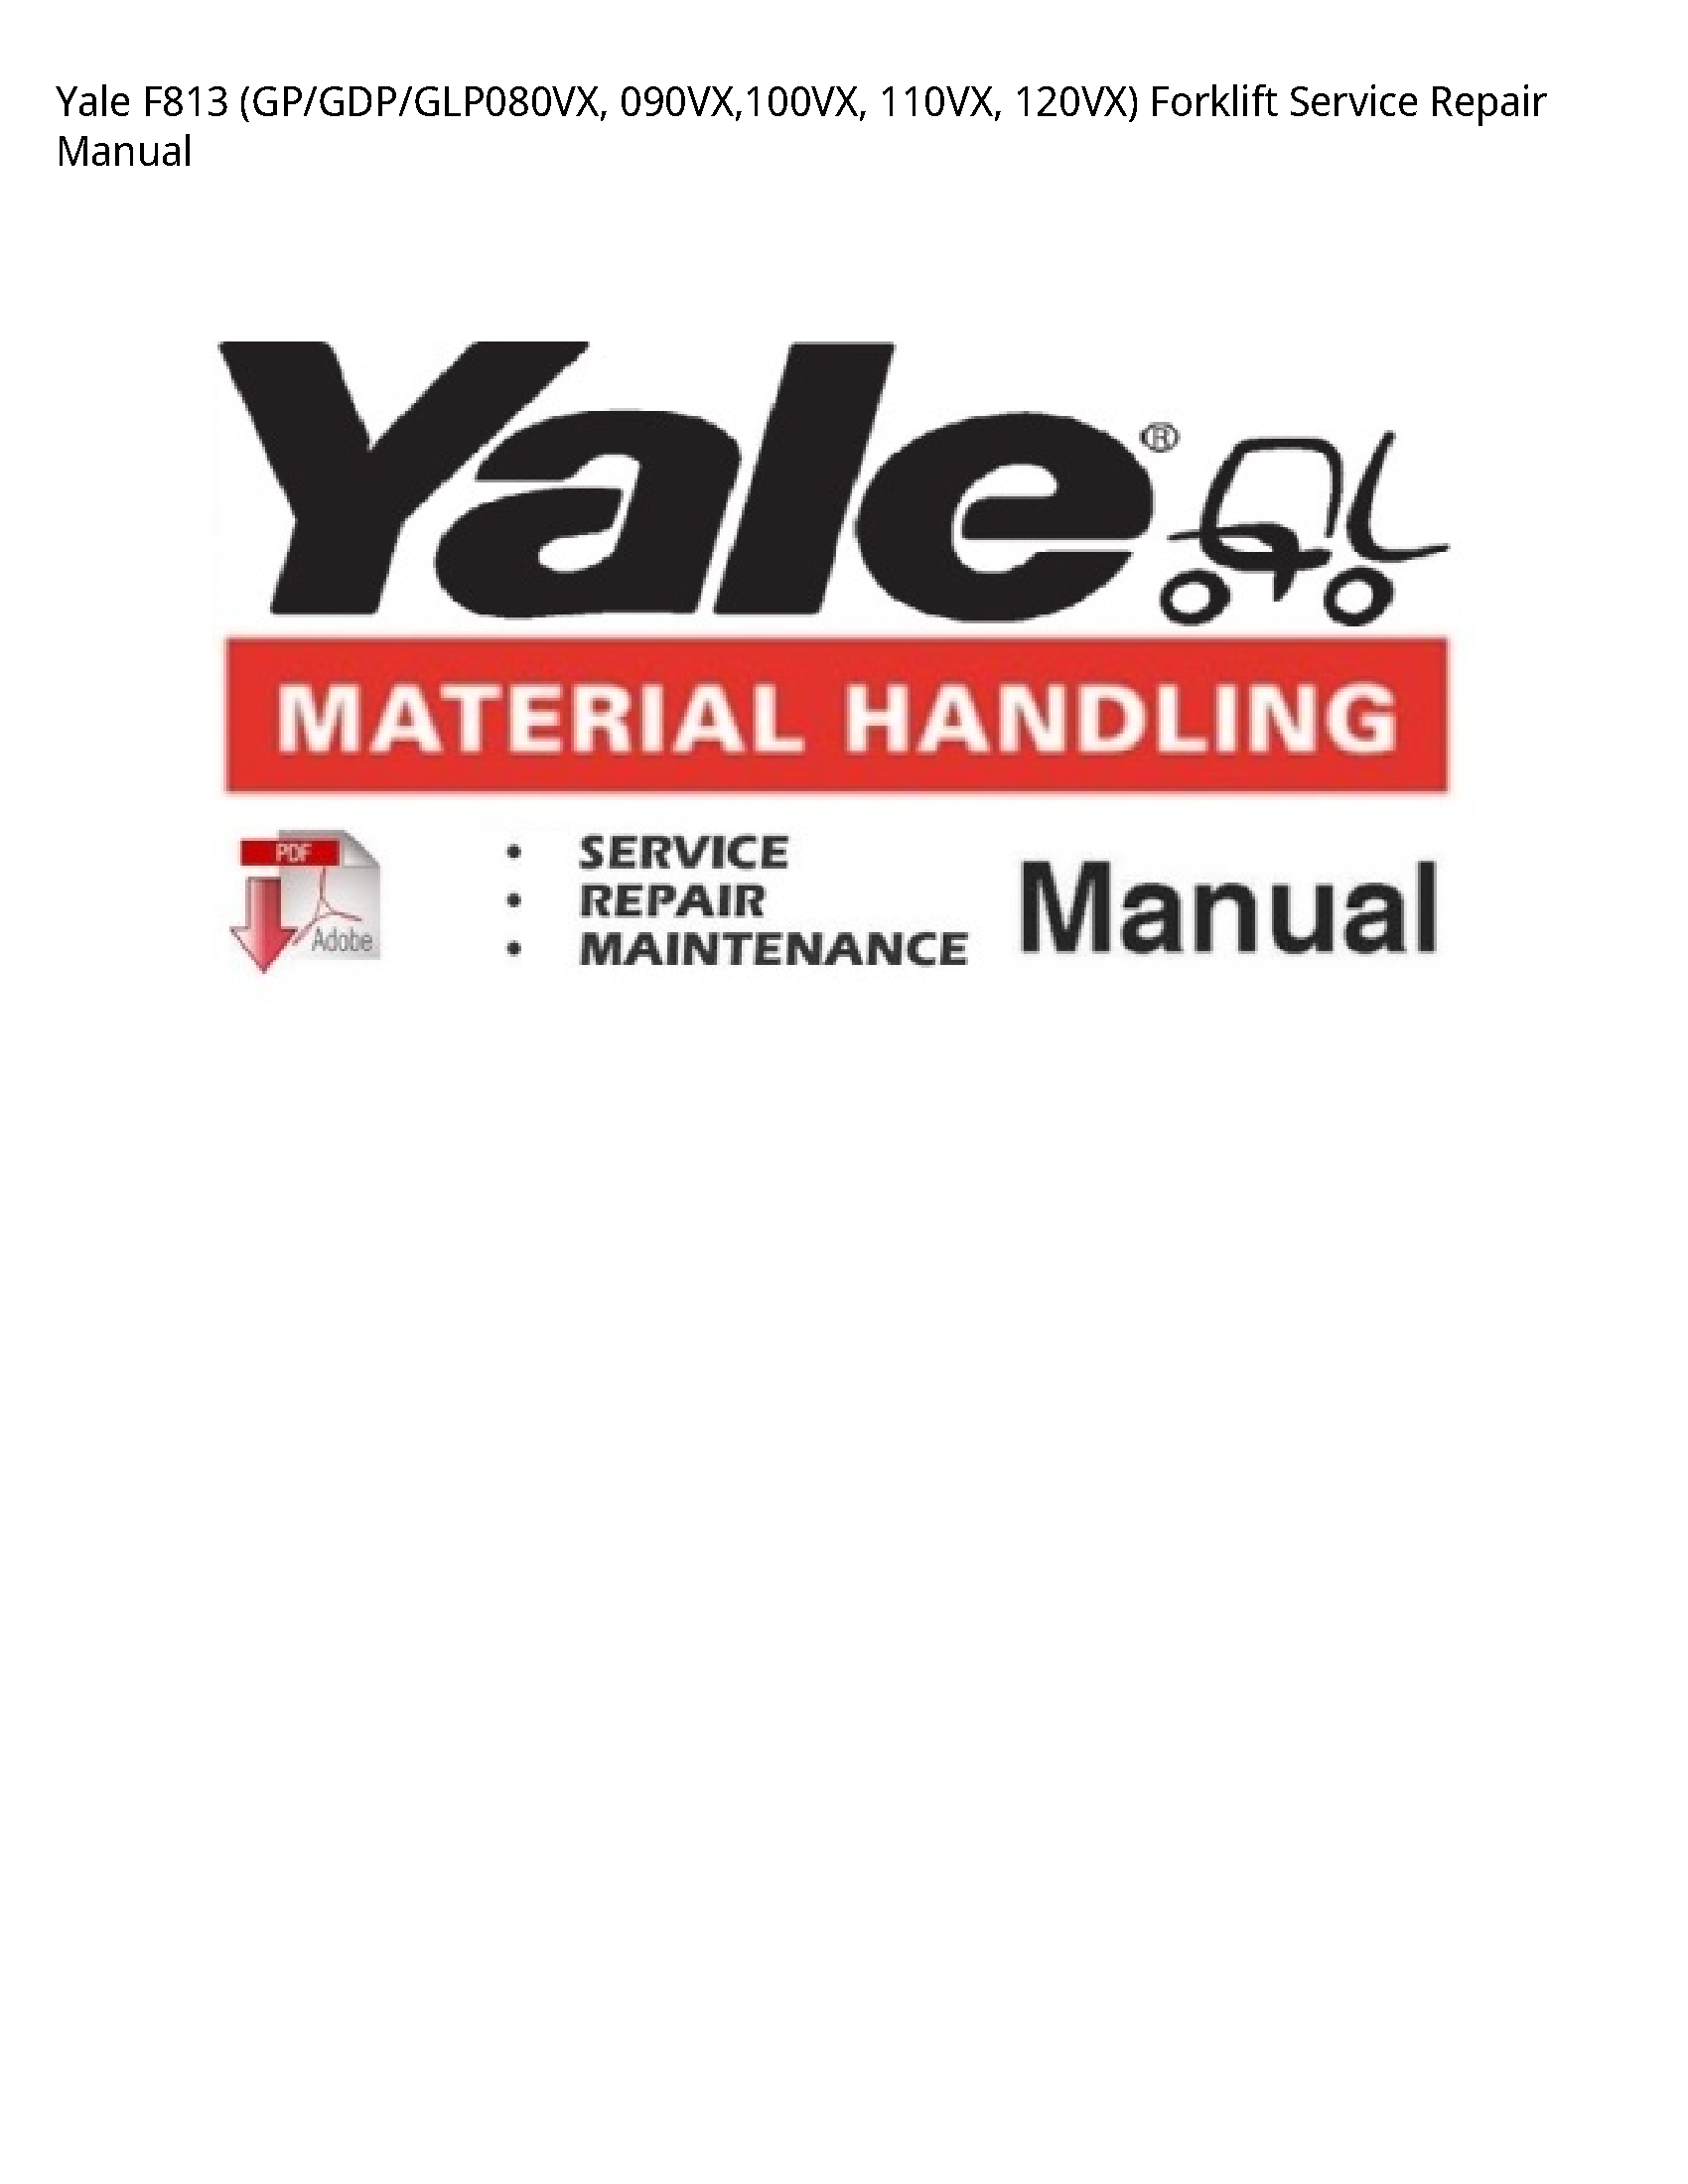 Yale F813 Forklift manual